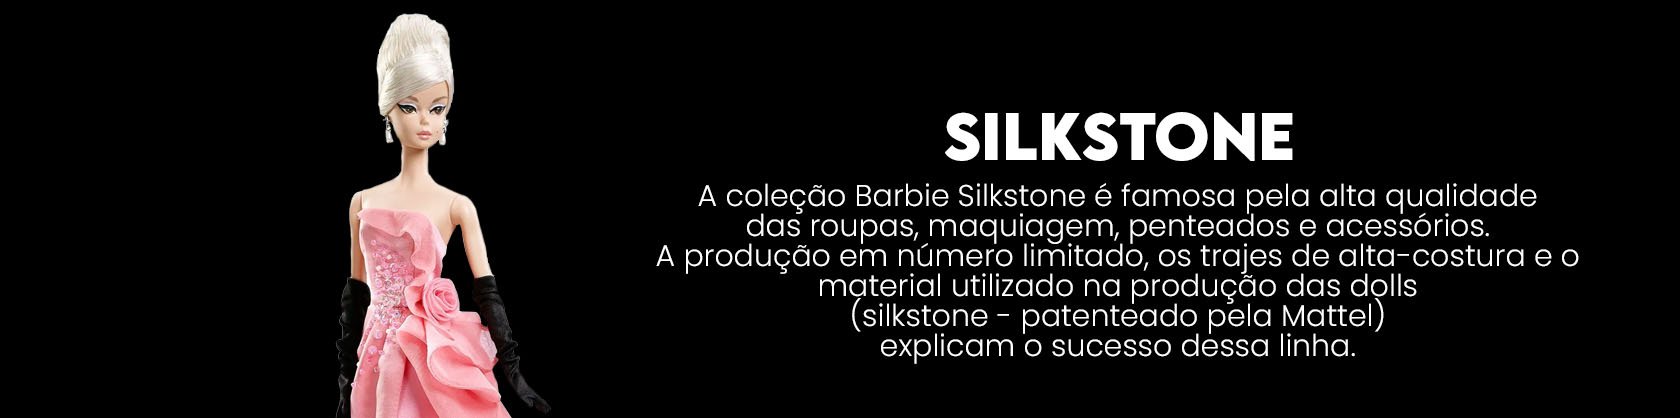 Silkstone